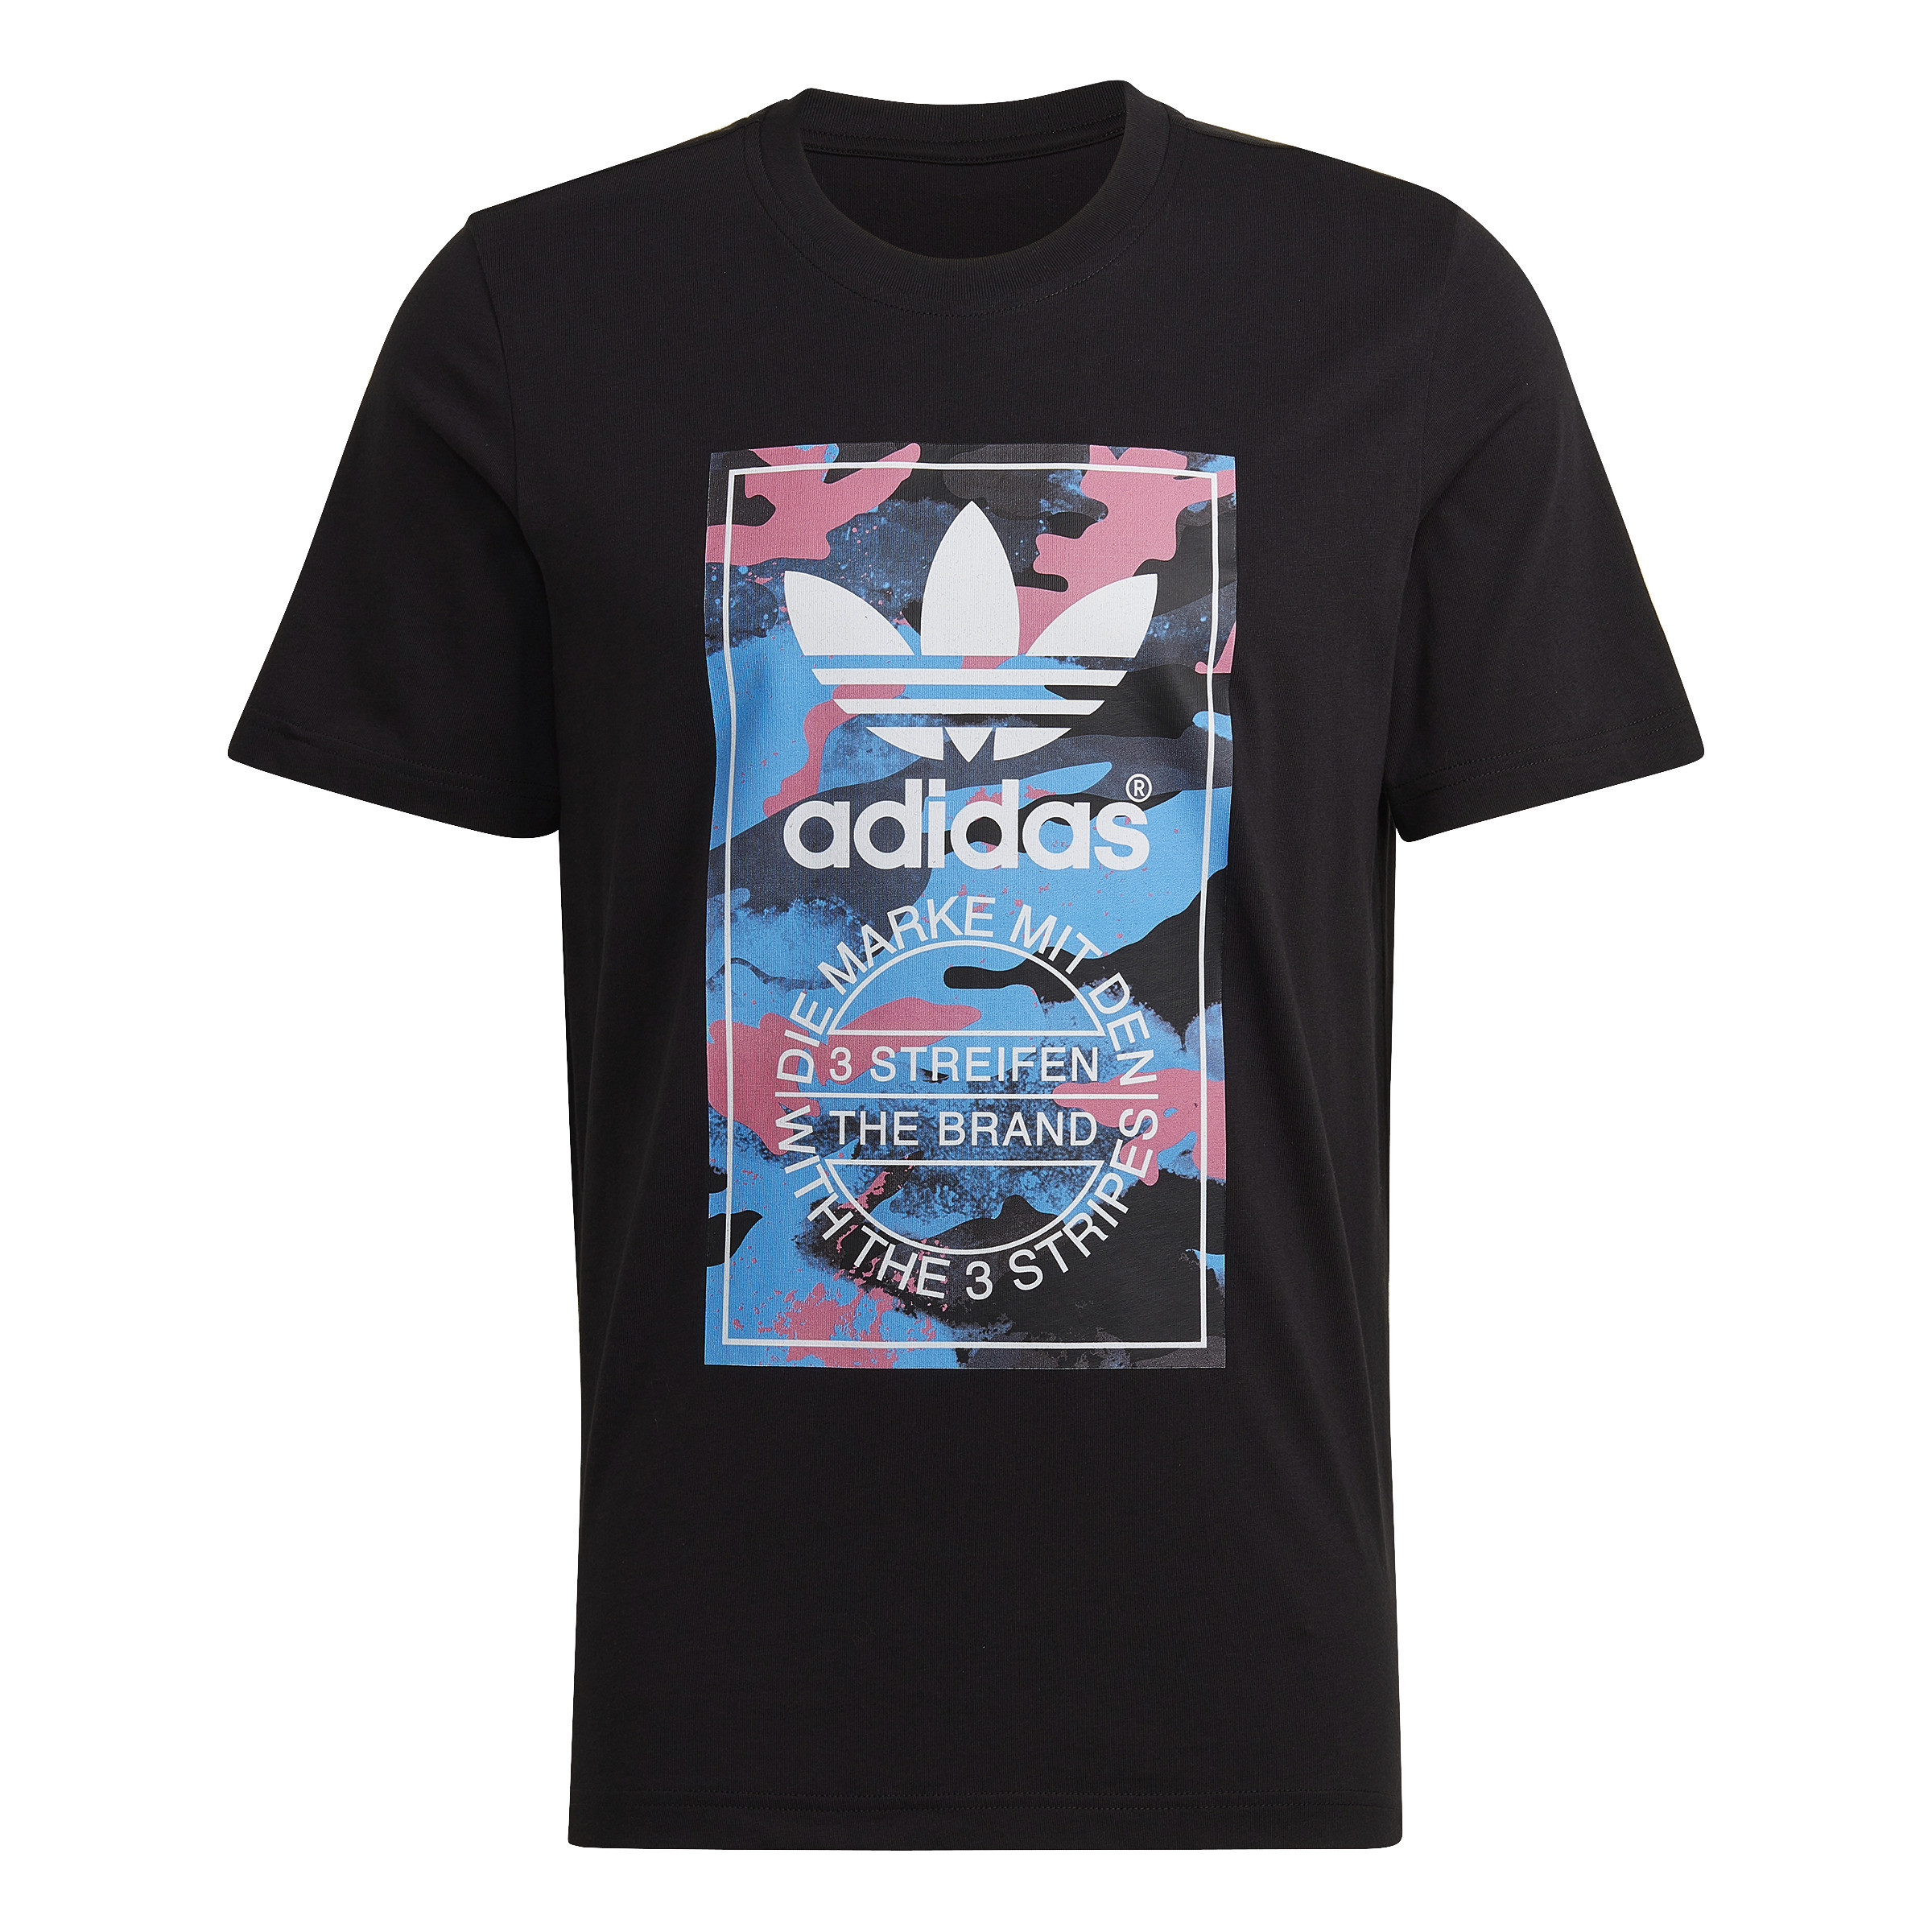 Adidas - Graphic Camo T-shirt, Black, large image number 0